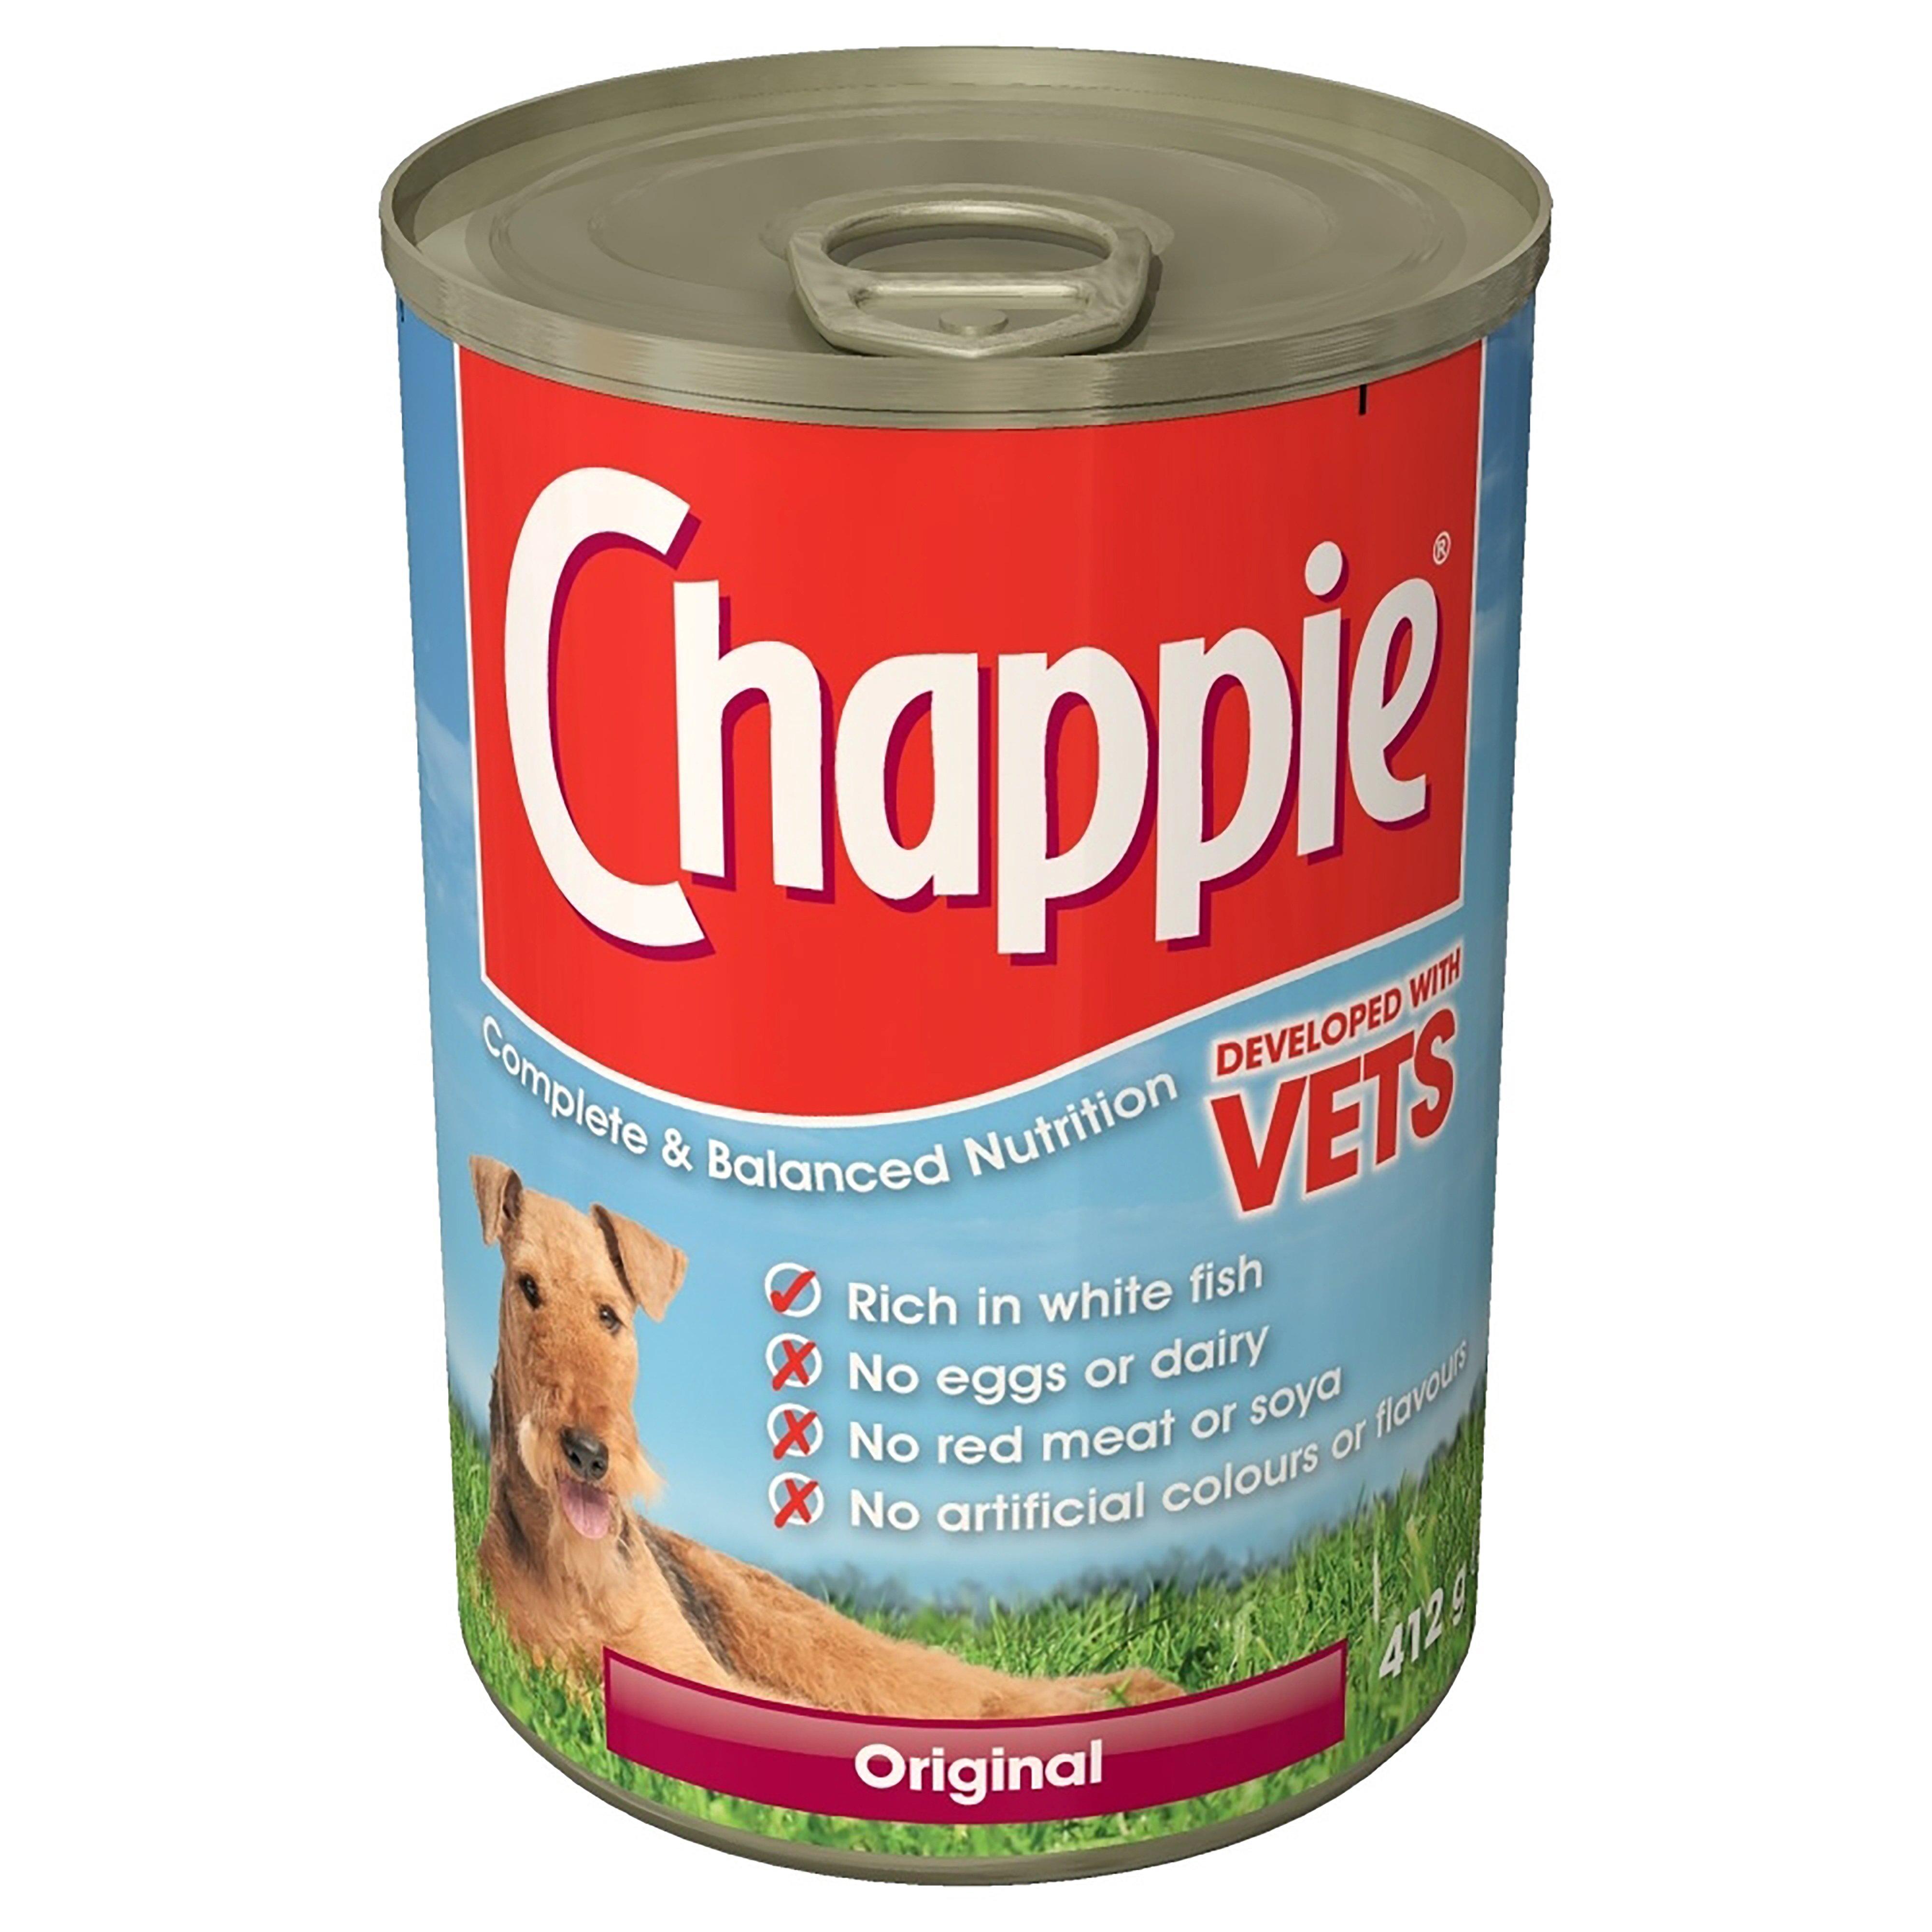 Chappie Original Dog Food 12 Pack